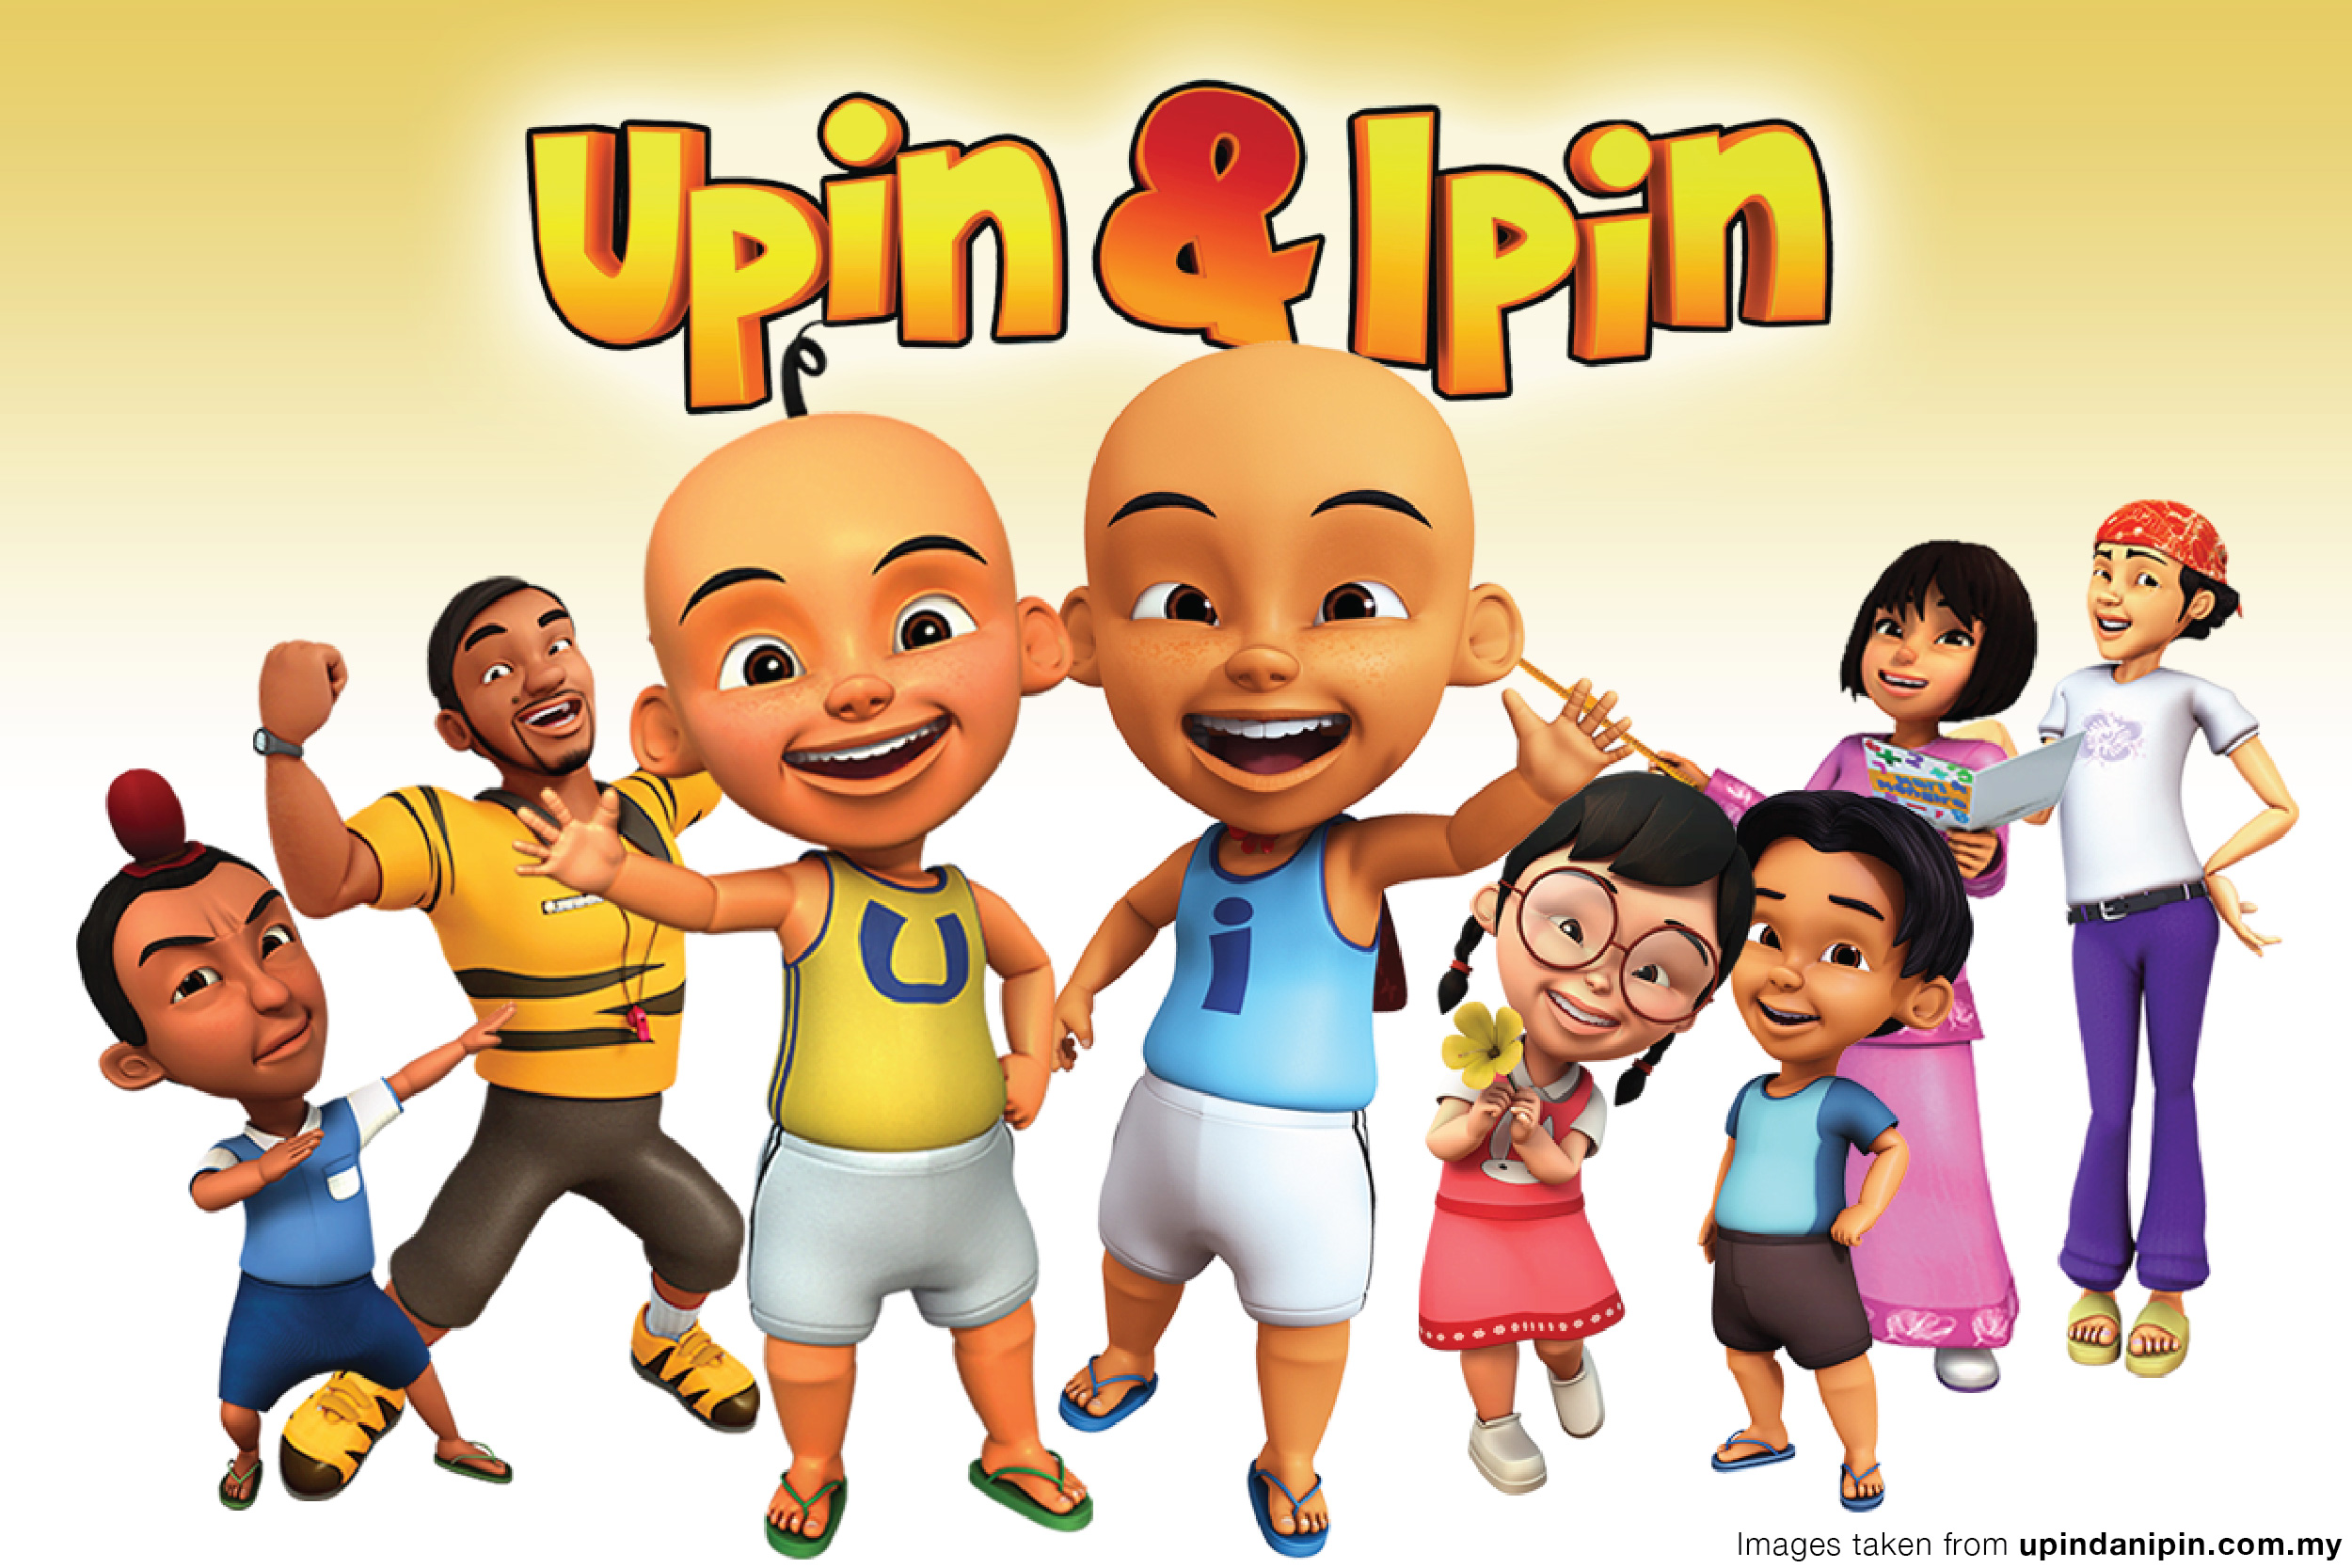 UPIN & IPIN - Malaysia’s Favourite Animated Twin Boys